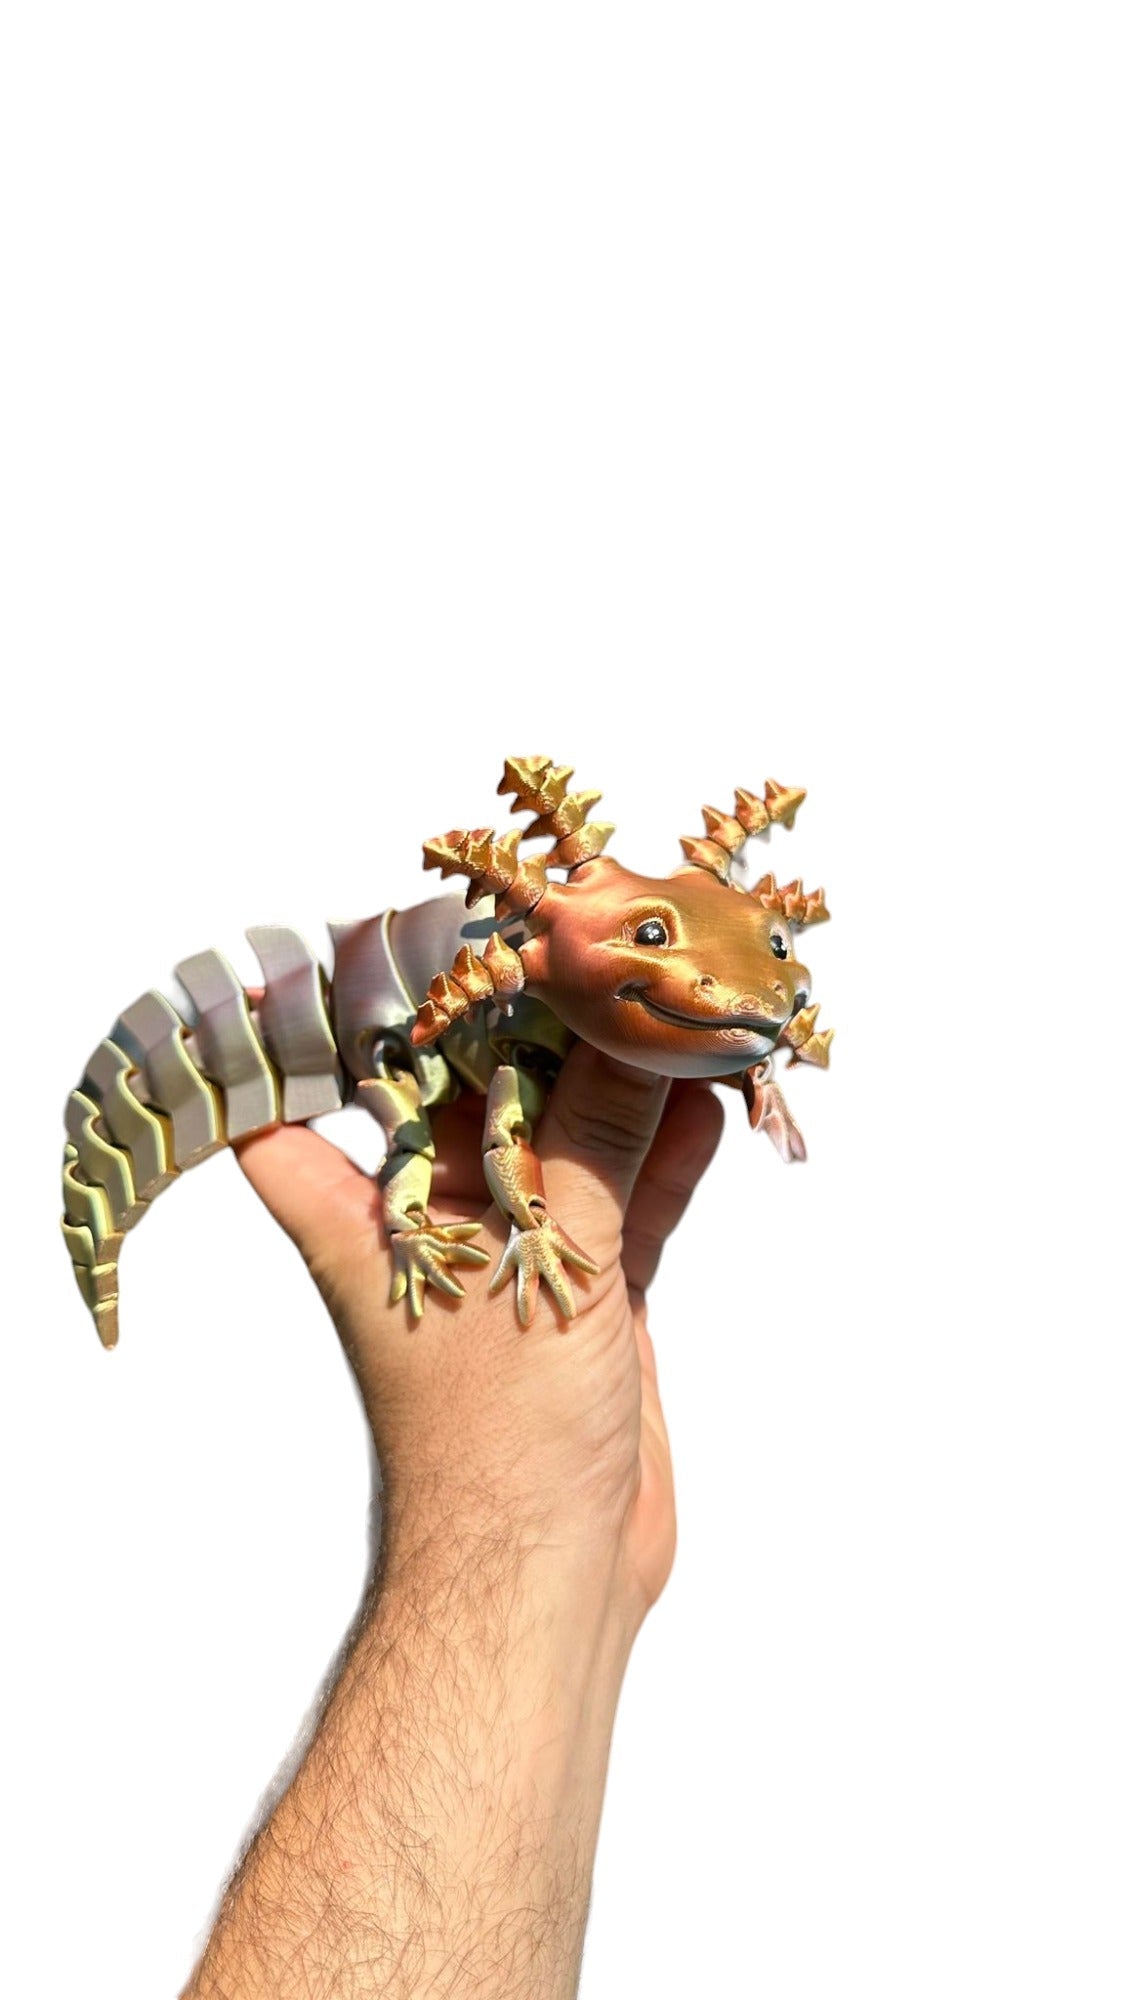 Baby 3D Printed Axolotl